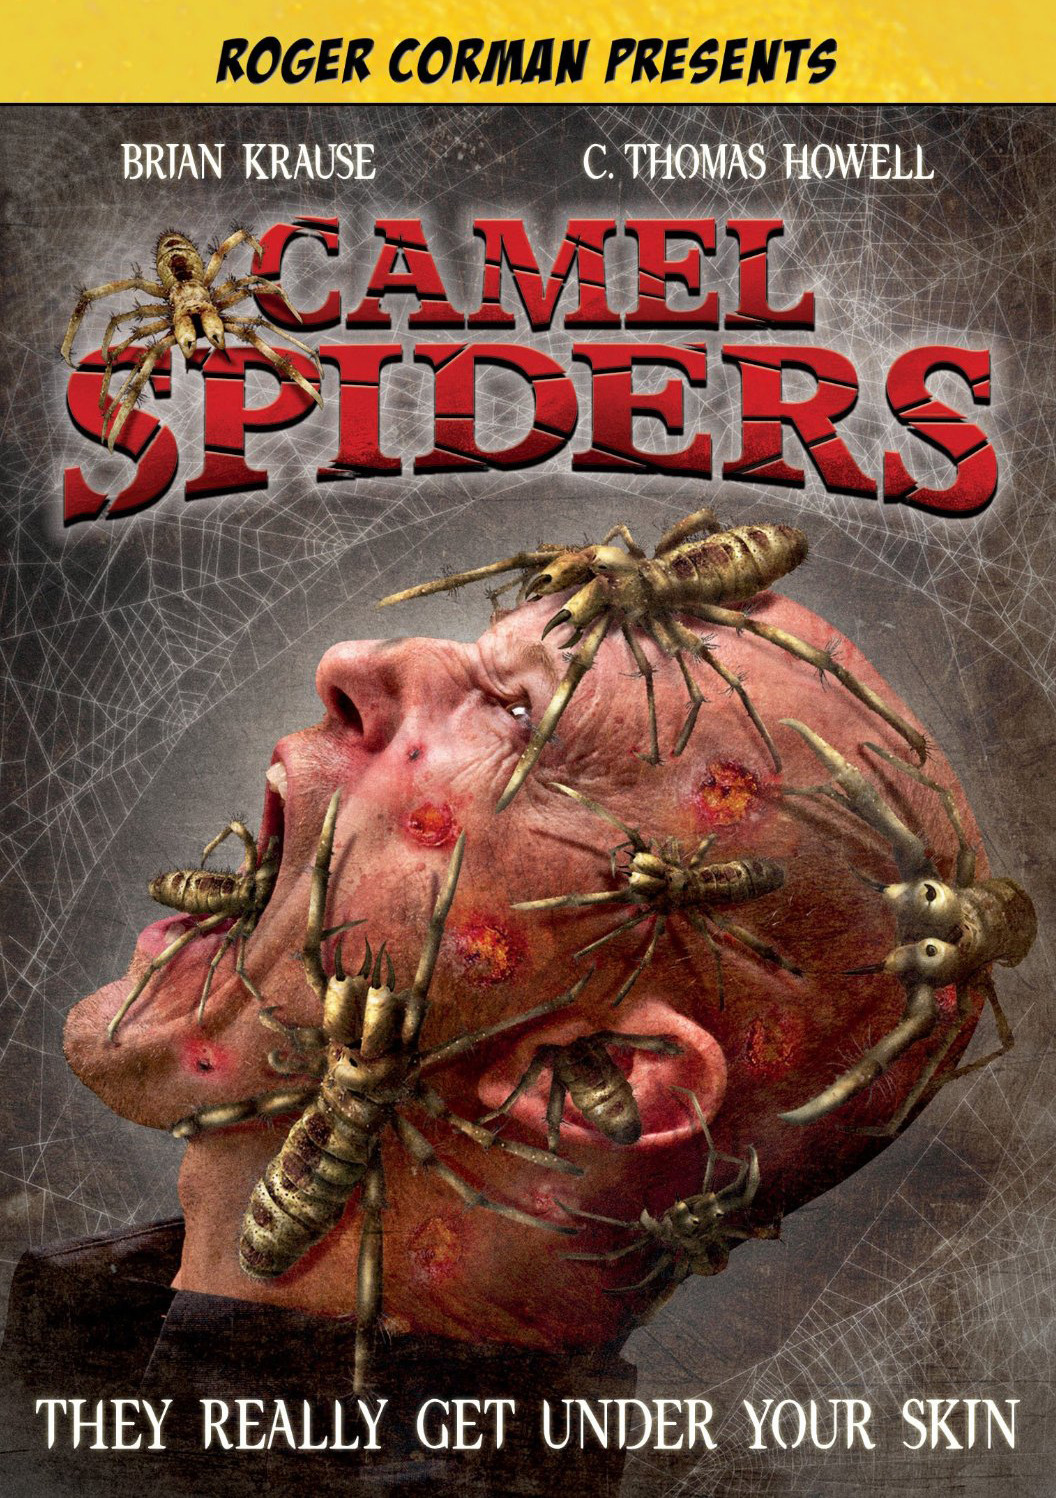 Camel Spiders (2012) DVDRip xvid Υπότιτλοι: Ελληνικοί